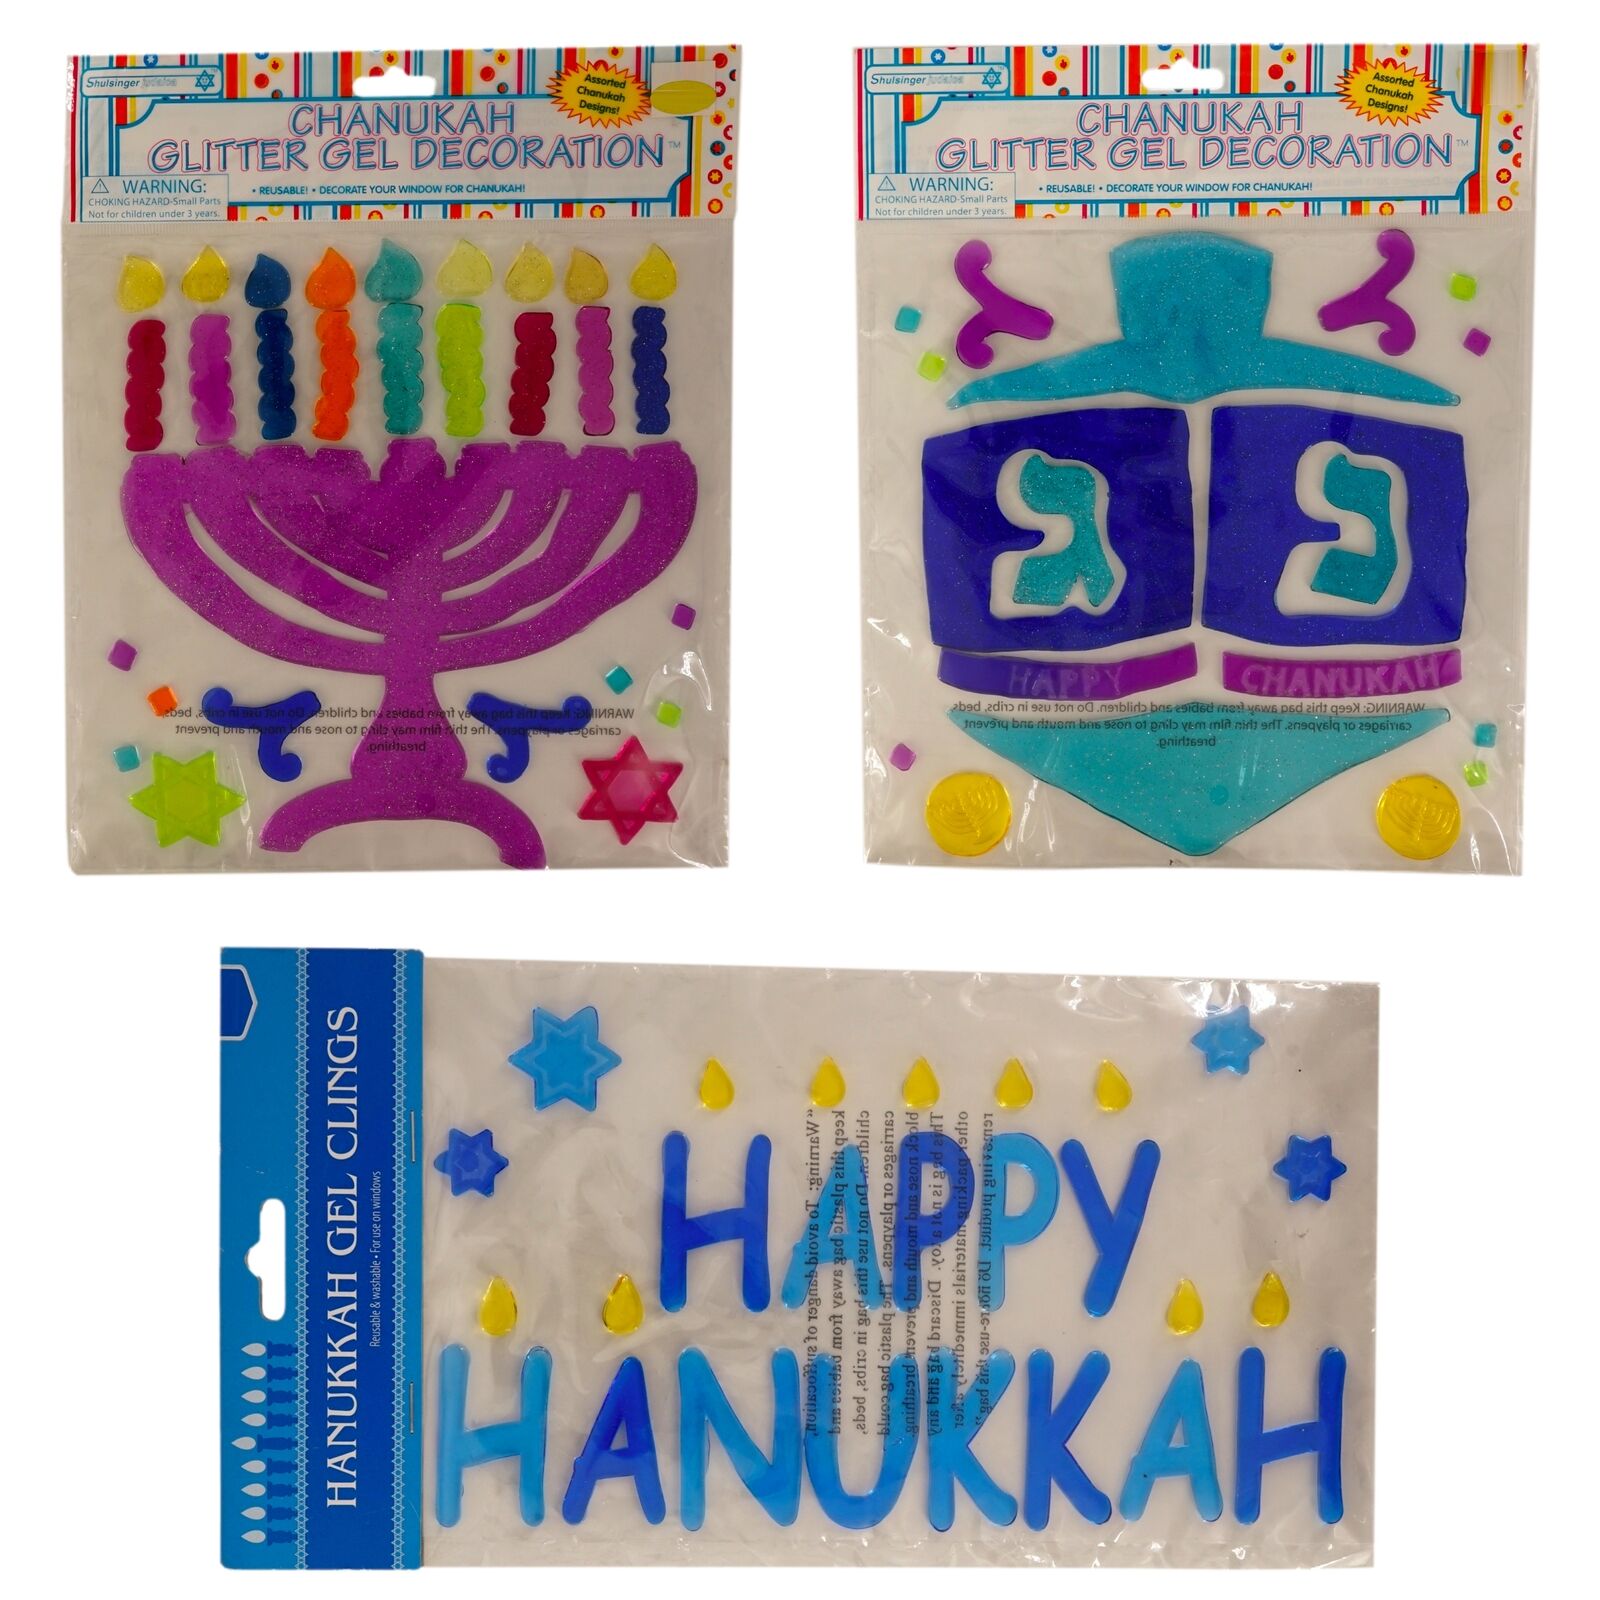 Hanukkah Glitter Gel Window Clings Decoration Bundle (Purple Menorah, Blue